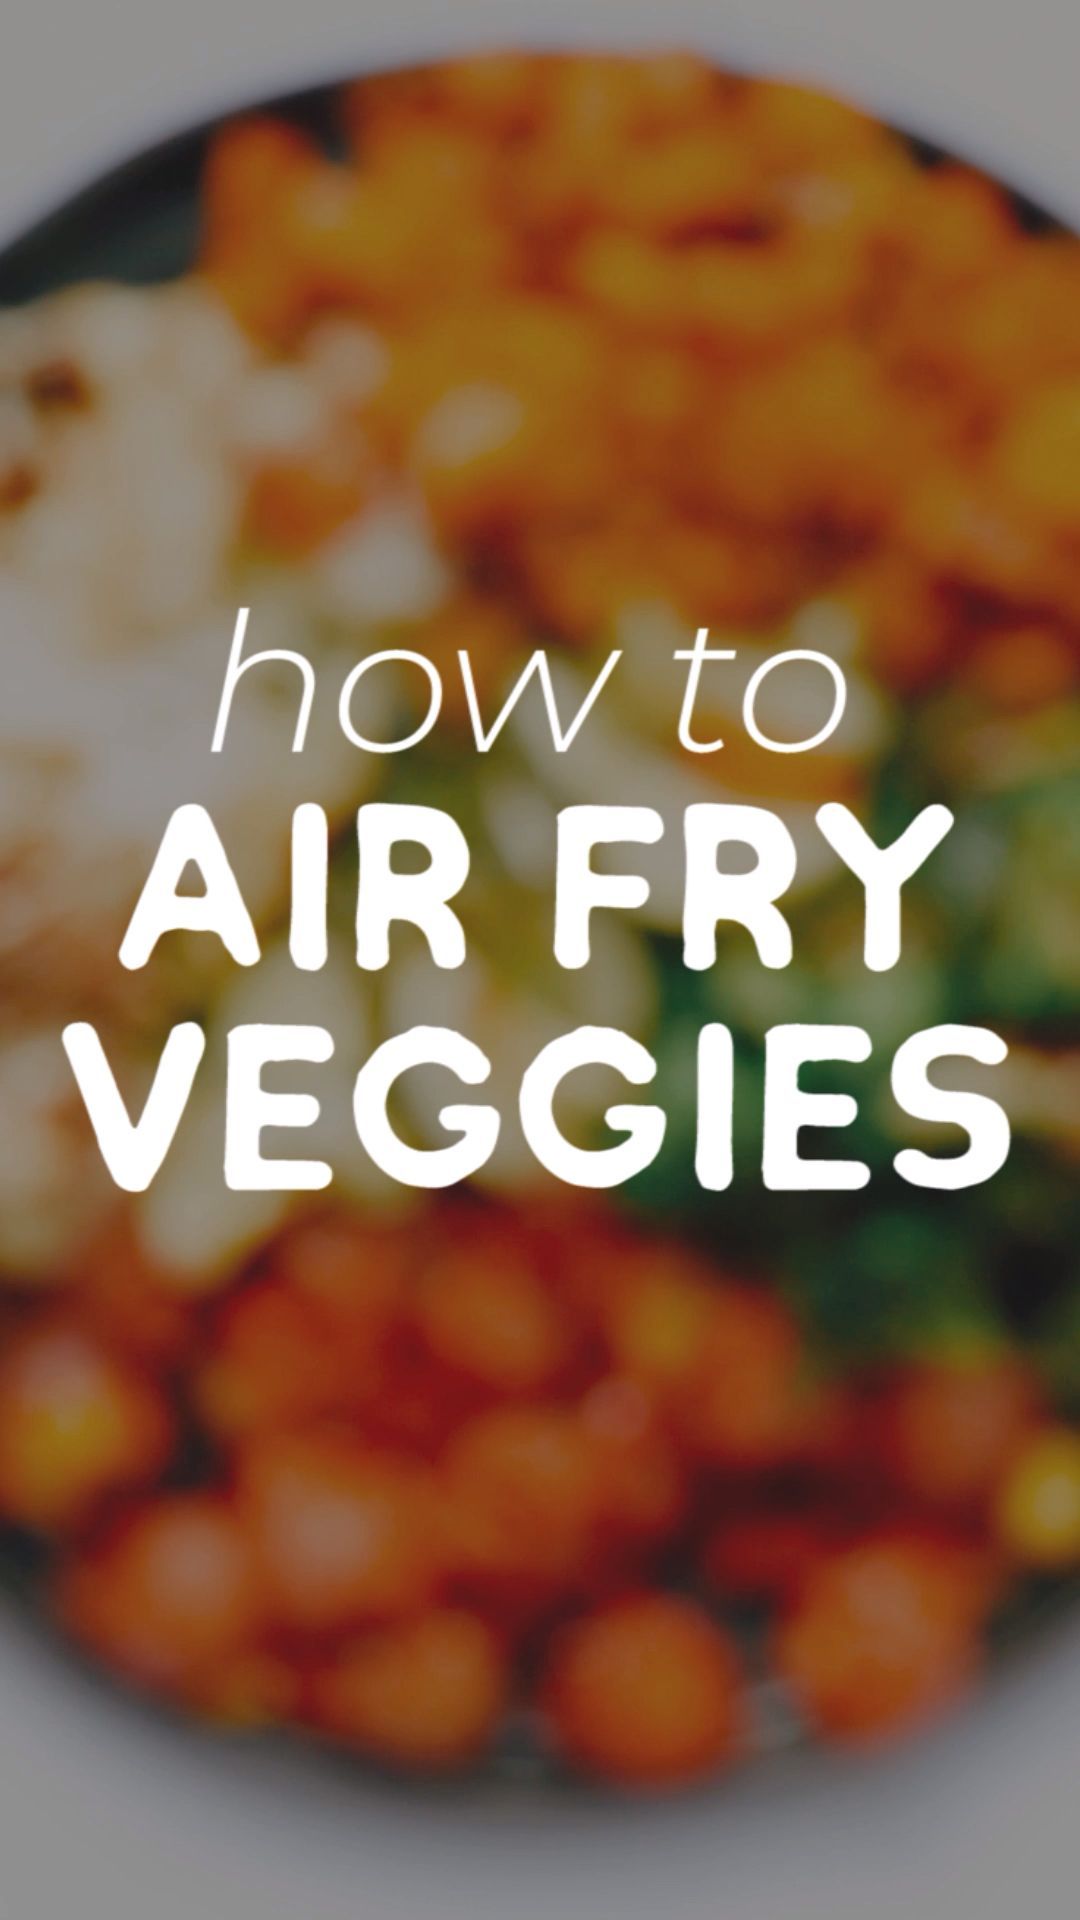 25 air fryer recipes healthy vegetables ideas